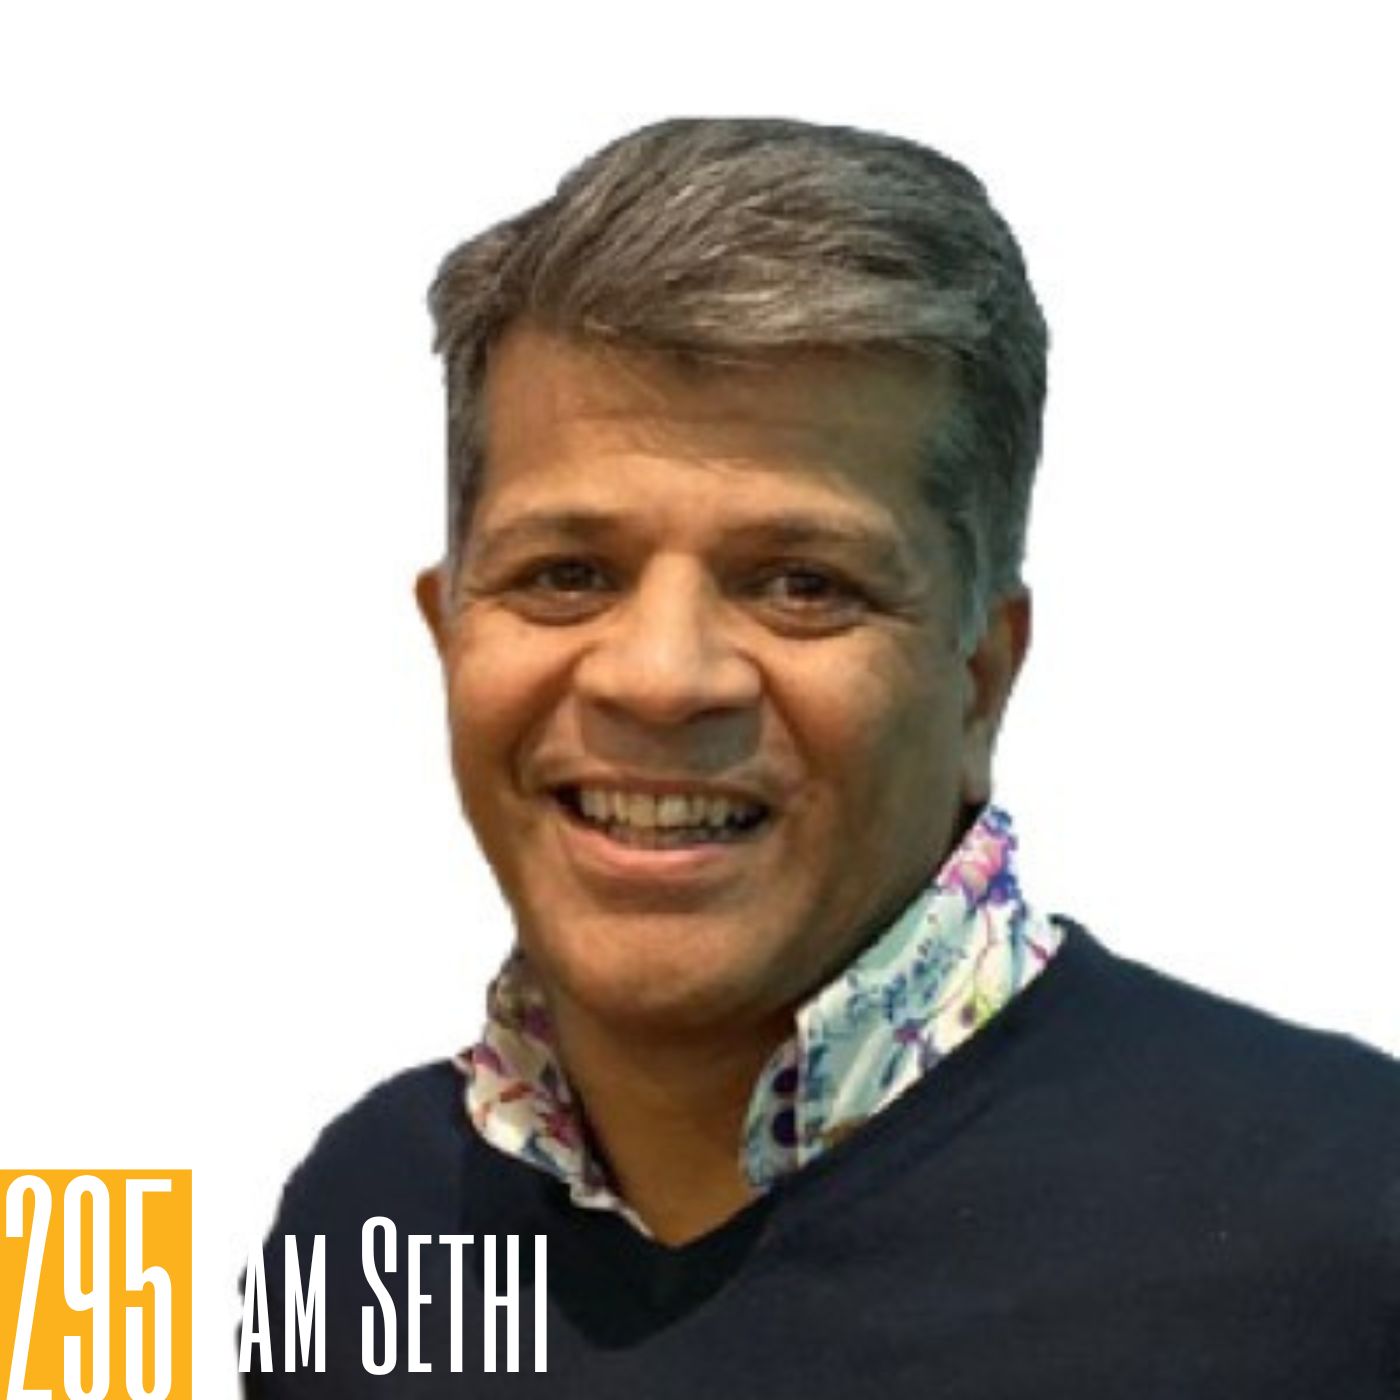 Episode image for 295 Sam Sethi - Self-Deprecation, Sarcasm & Creating Communities Through Podcasting